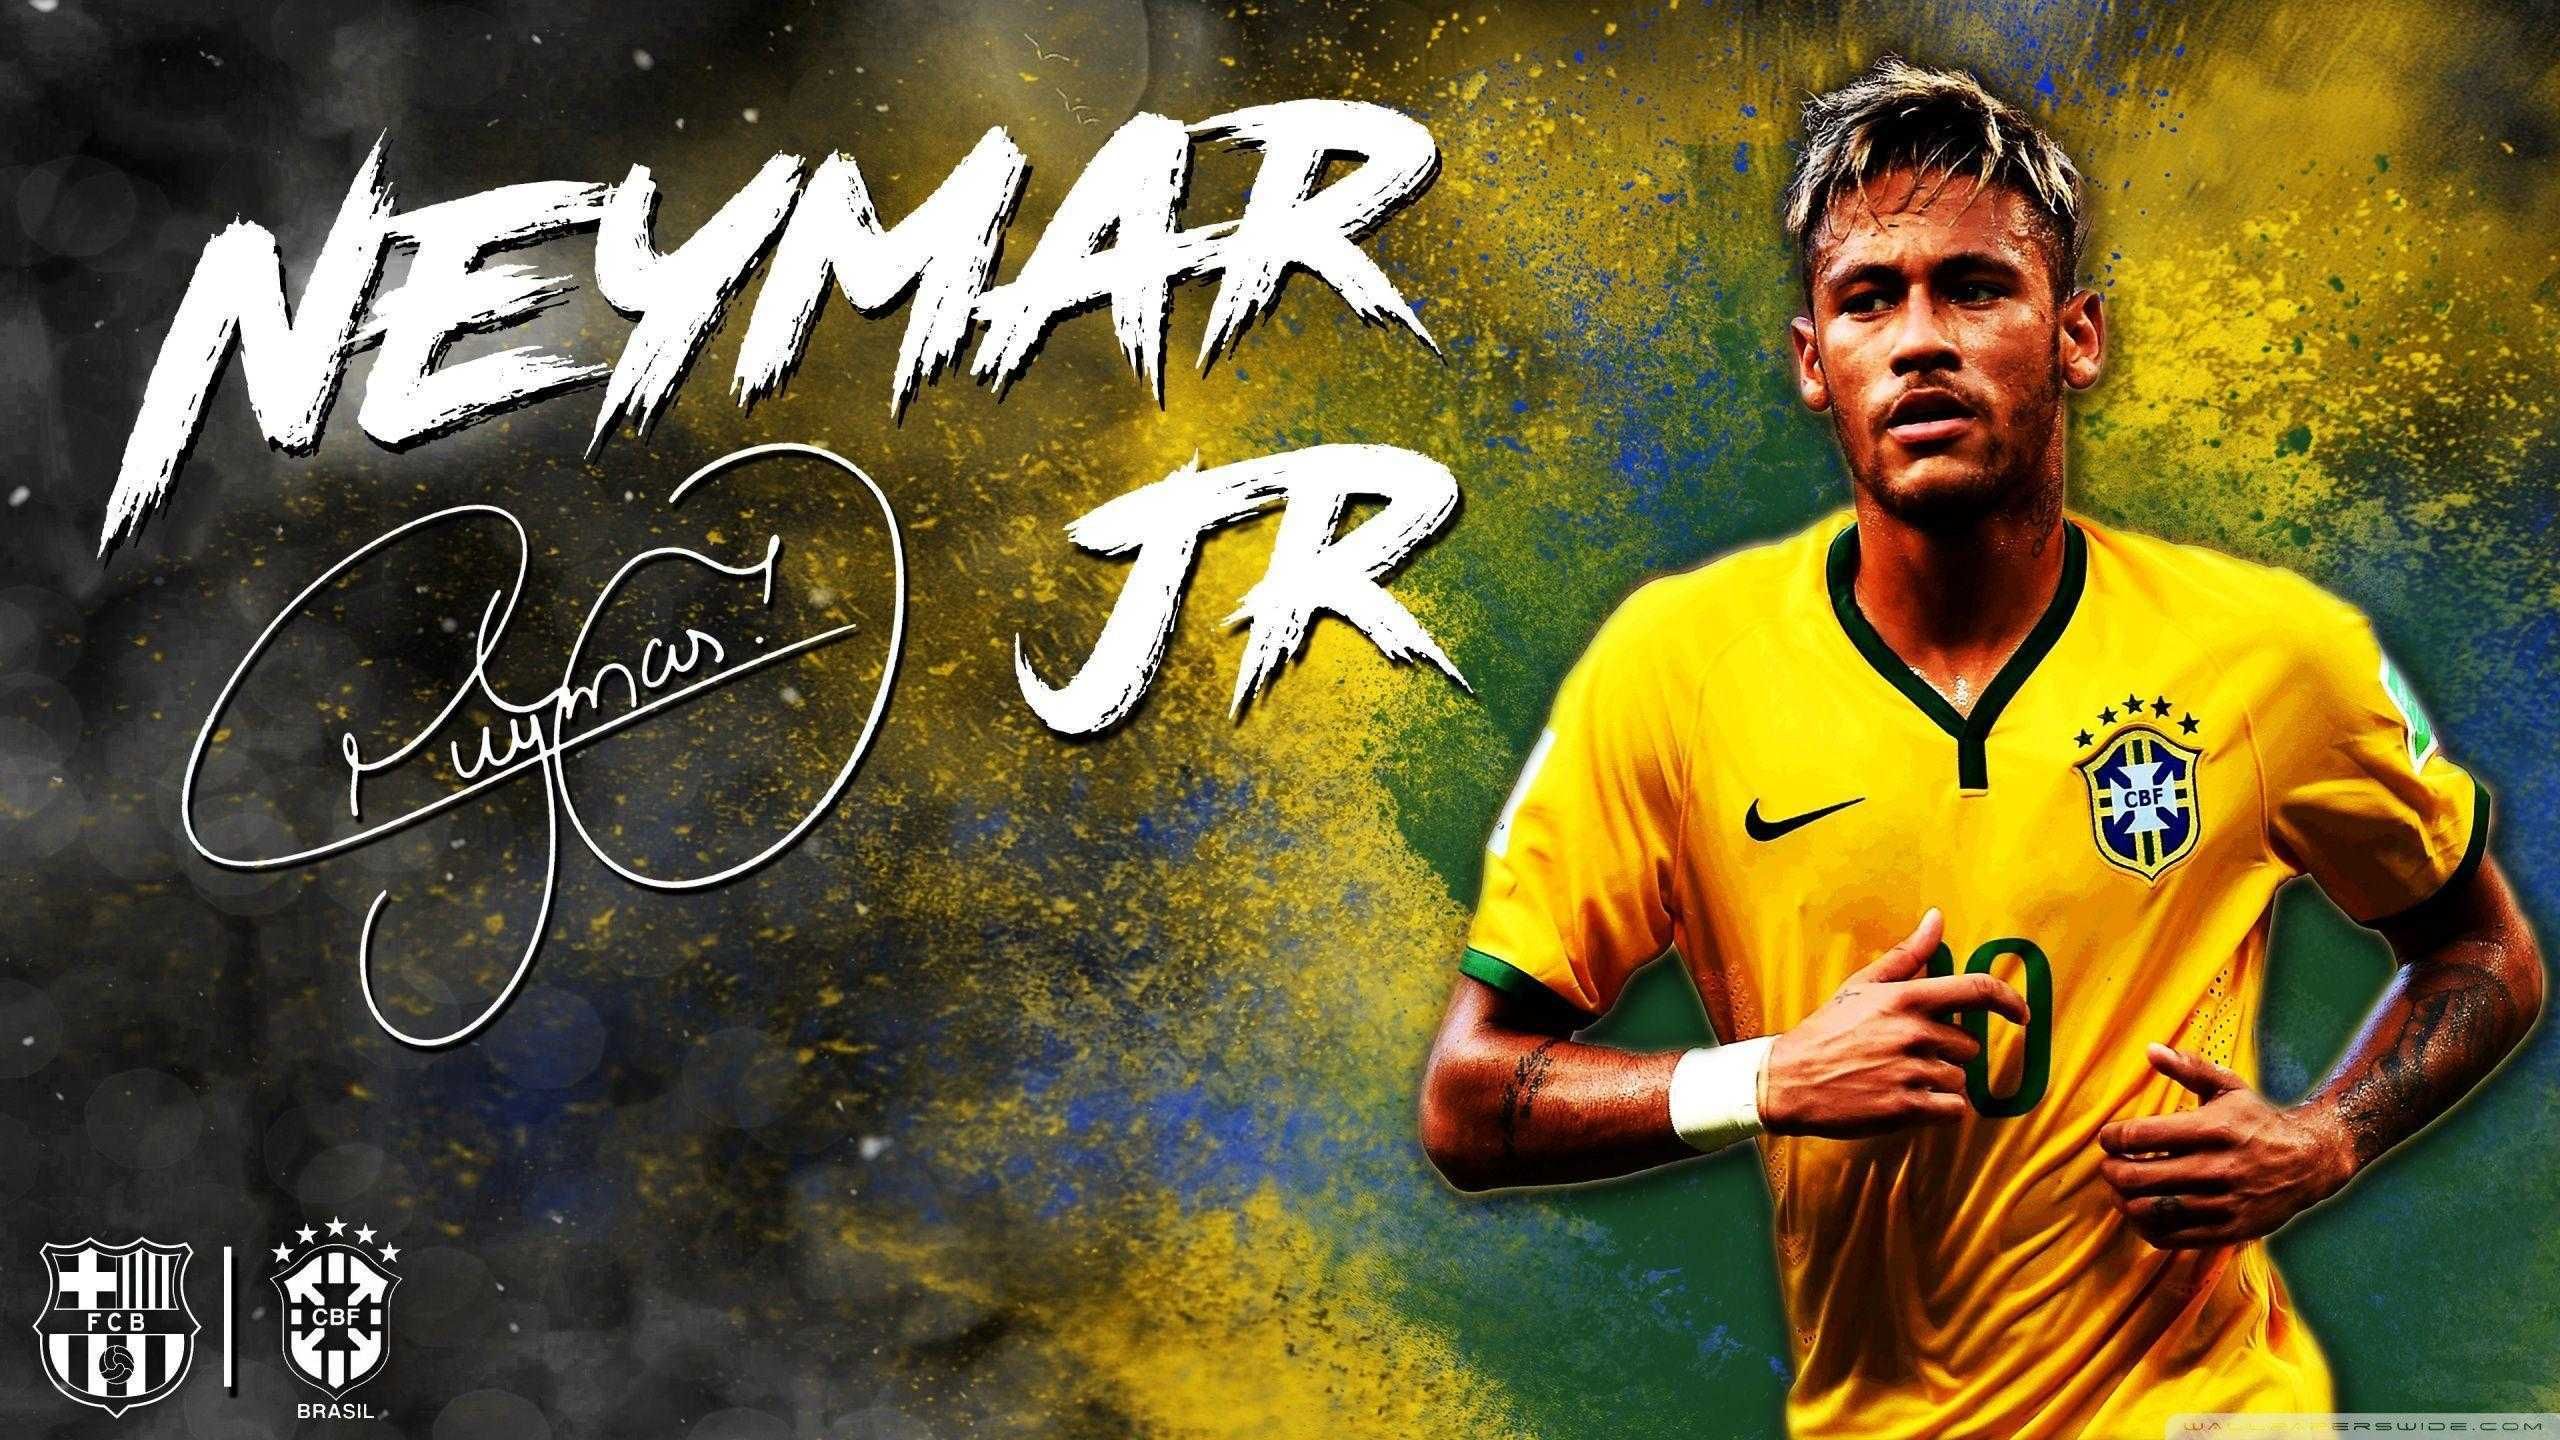 Cool Neymar Jr Wallpapers